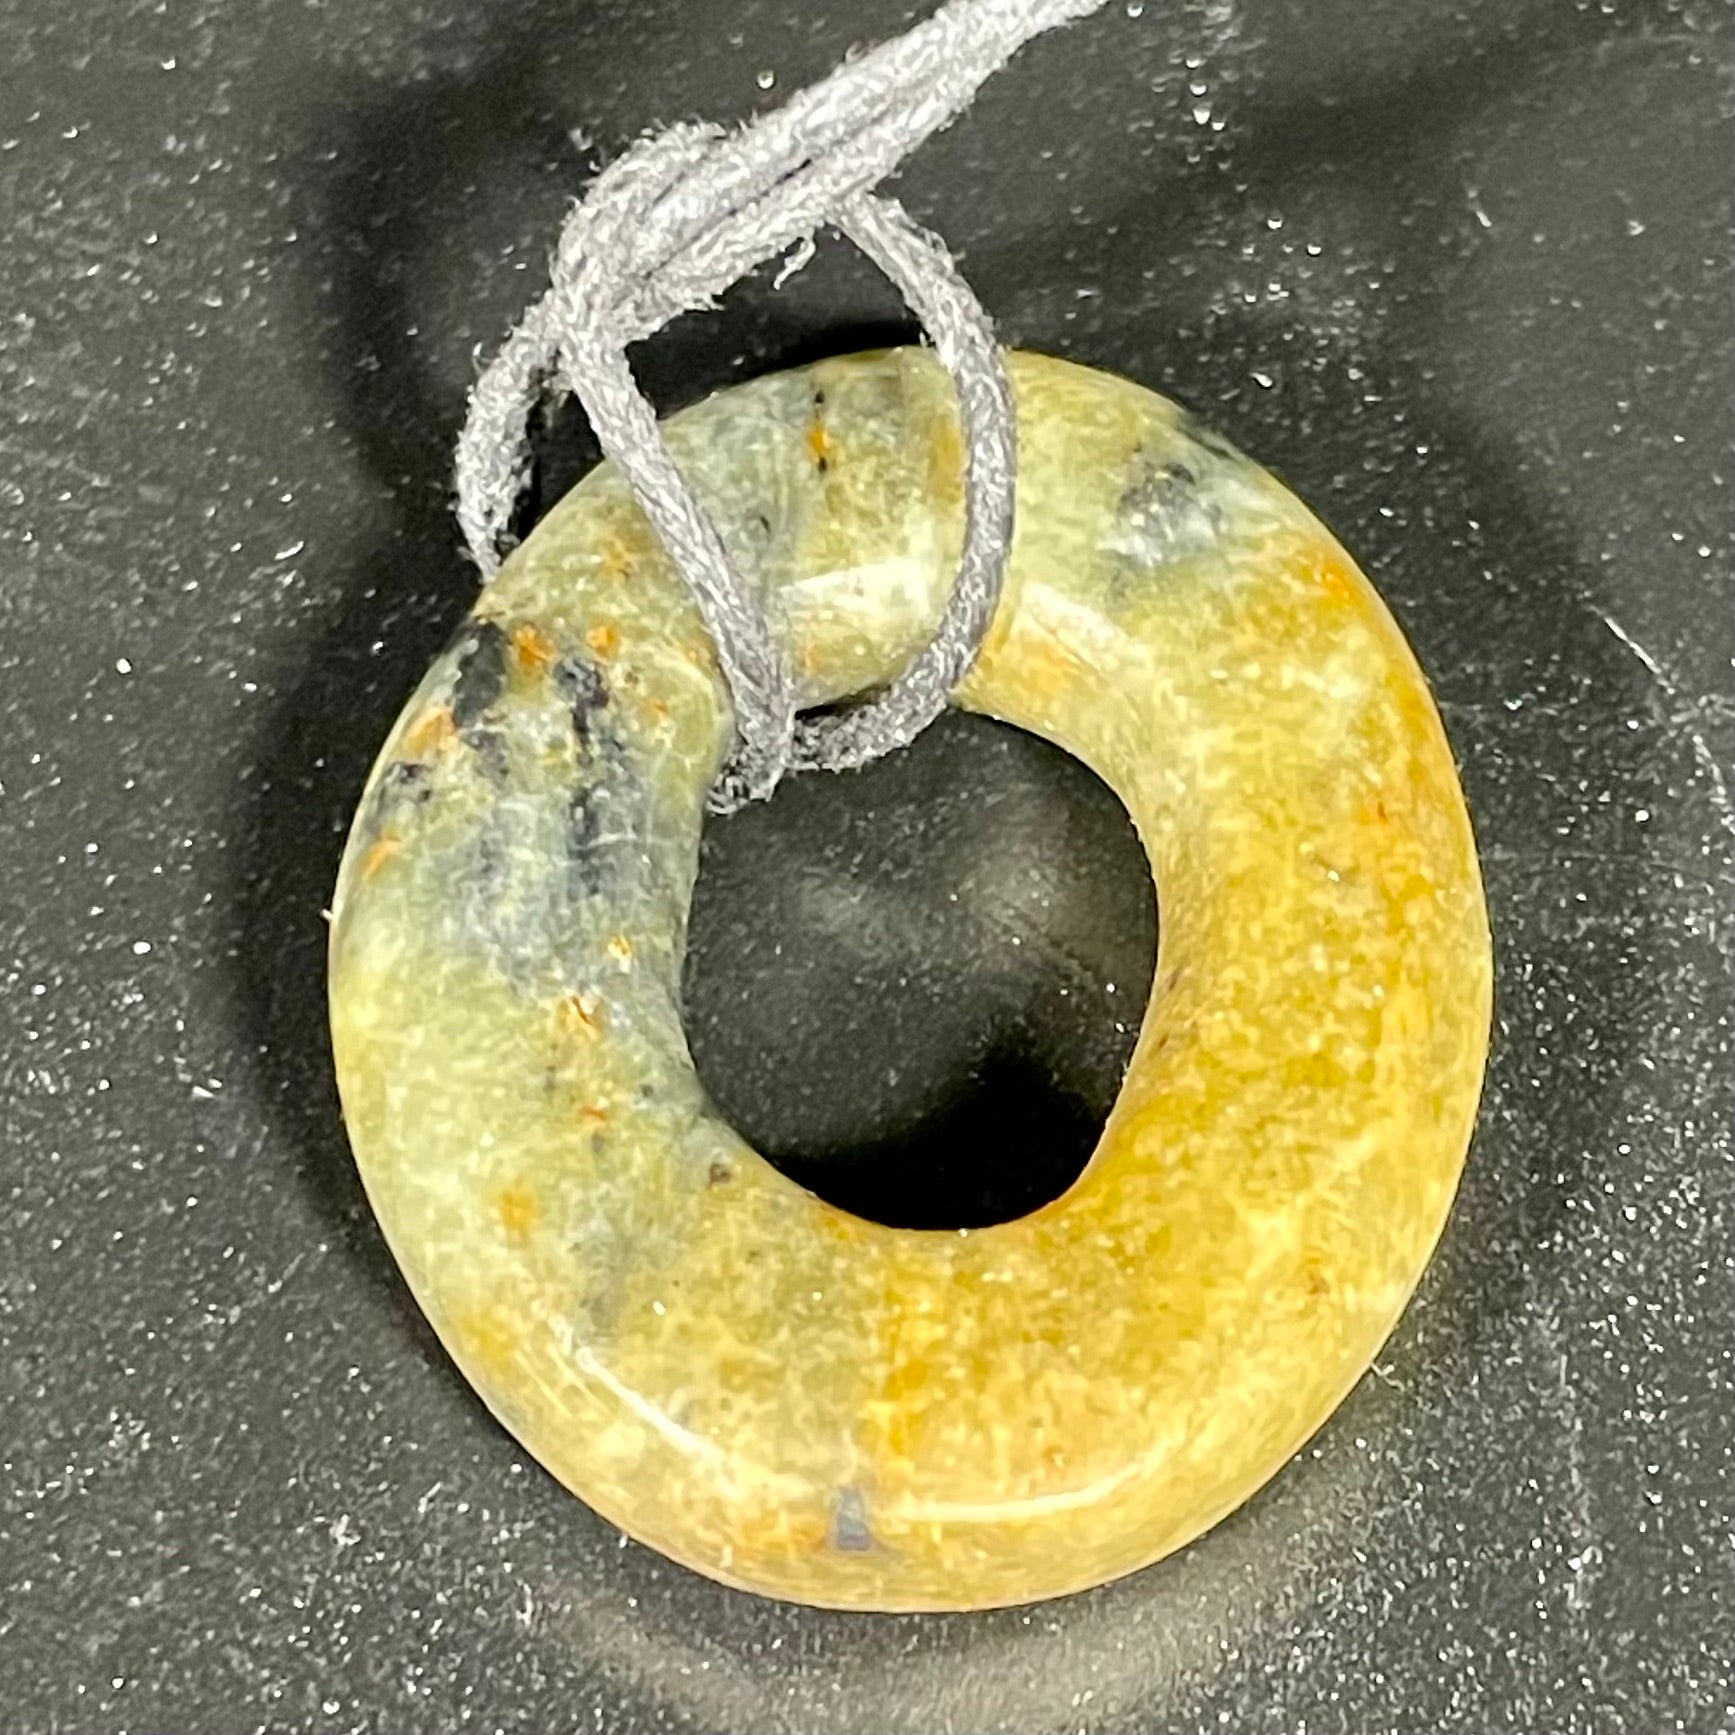 Unique circle pendant made at Fathom Stone Art classes, Whistler BC rainy day activity